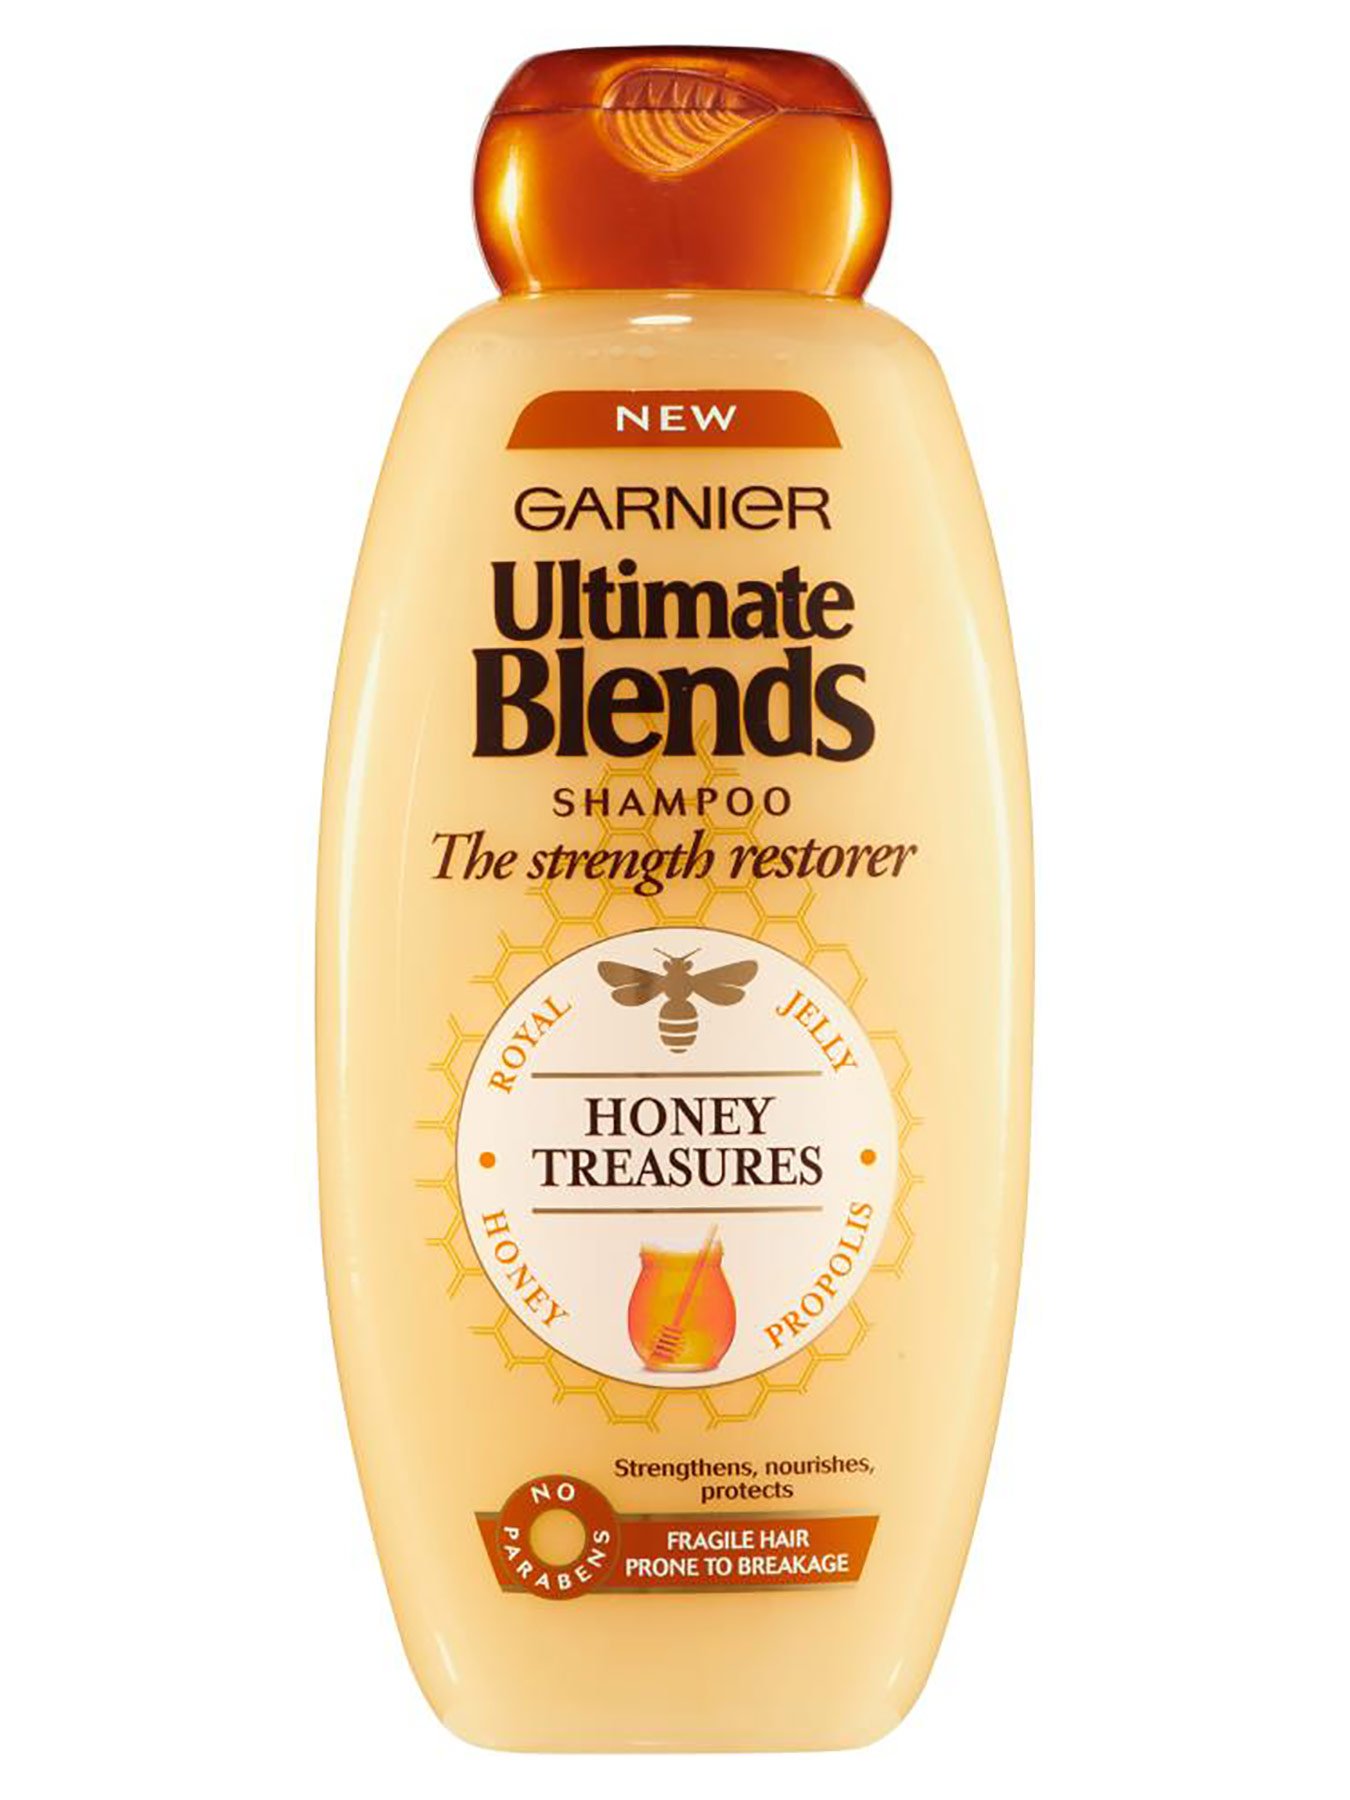 Garnier Blends Strength Restorer Honey Treasures Shampoo,